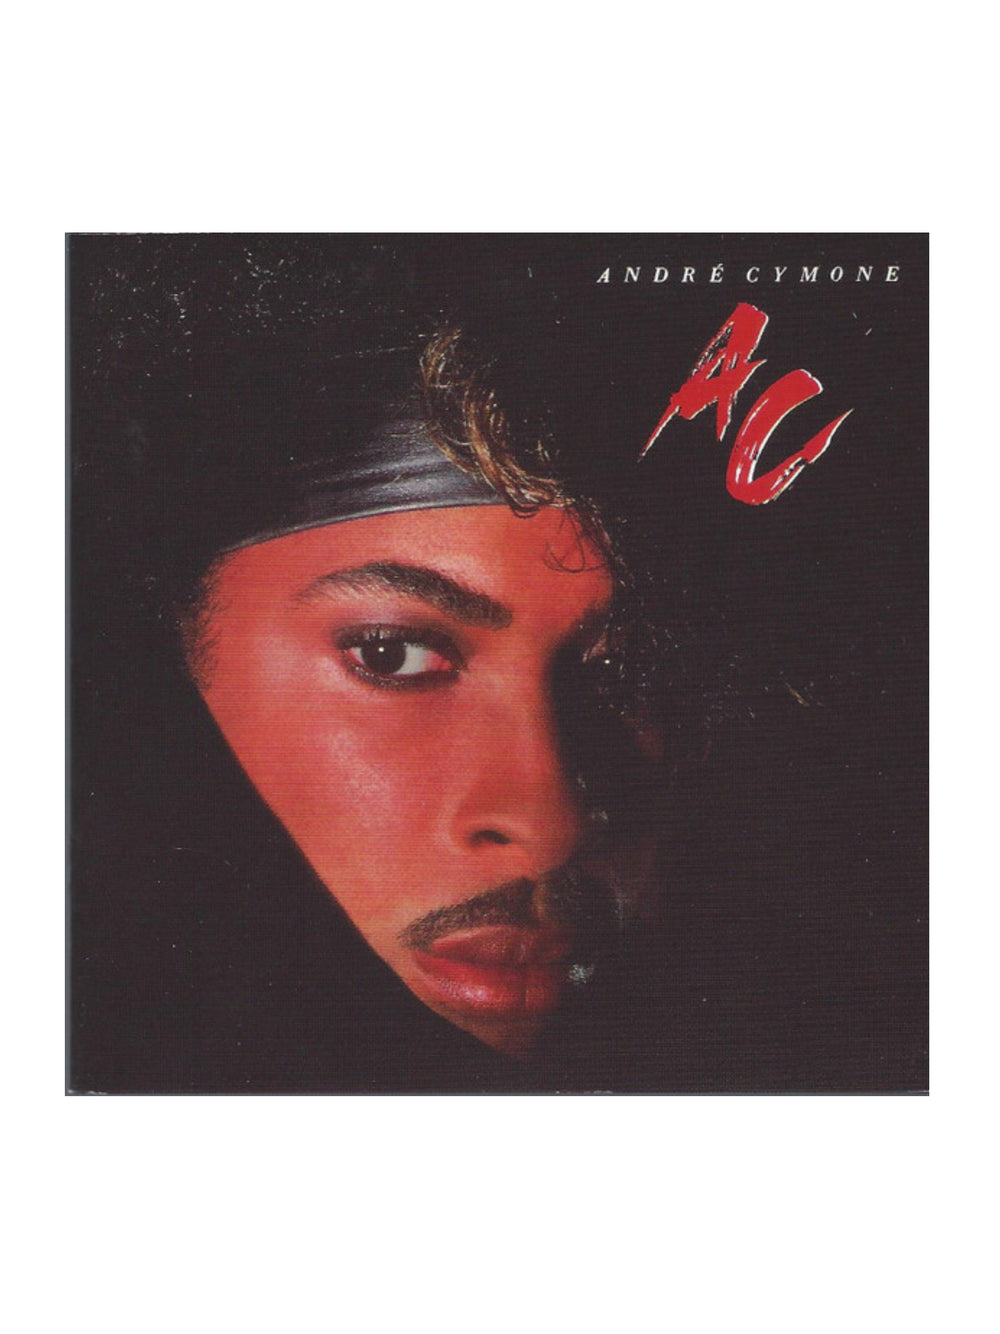 Prince – Andre Cymone AC CD Album Reissue Remaster Bonus Tracks UK Preloved: 2011